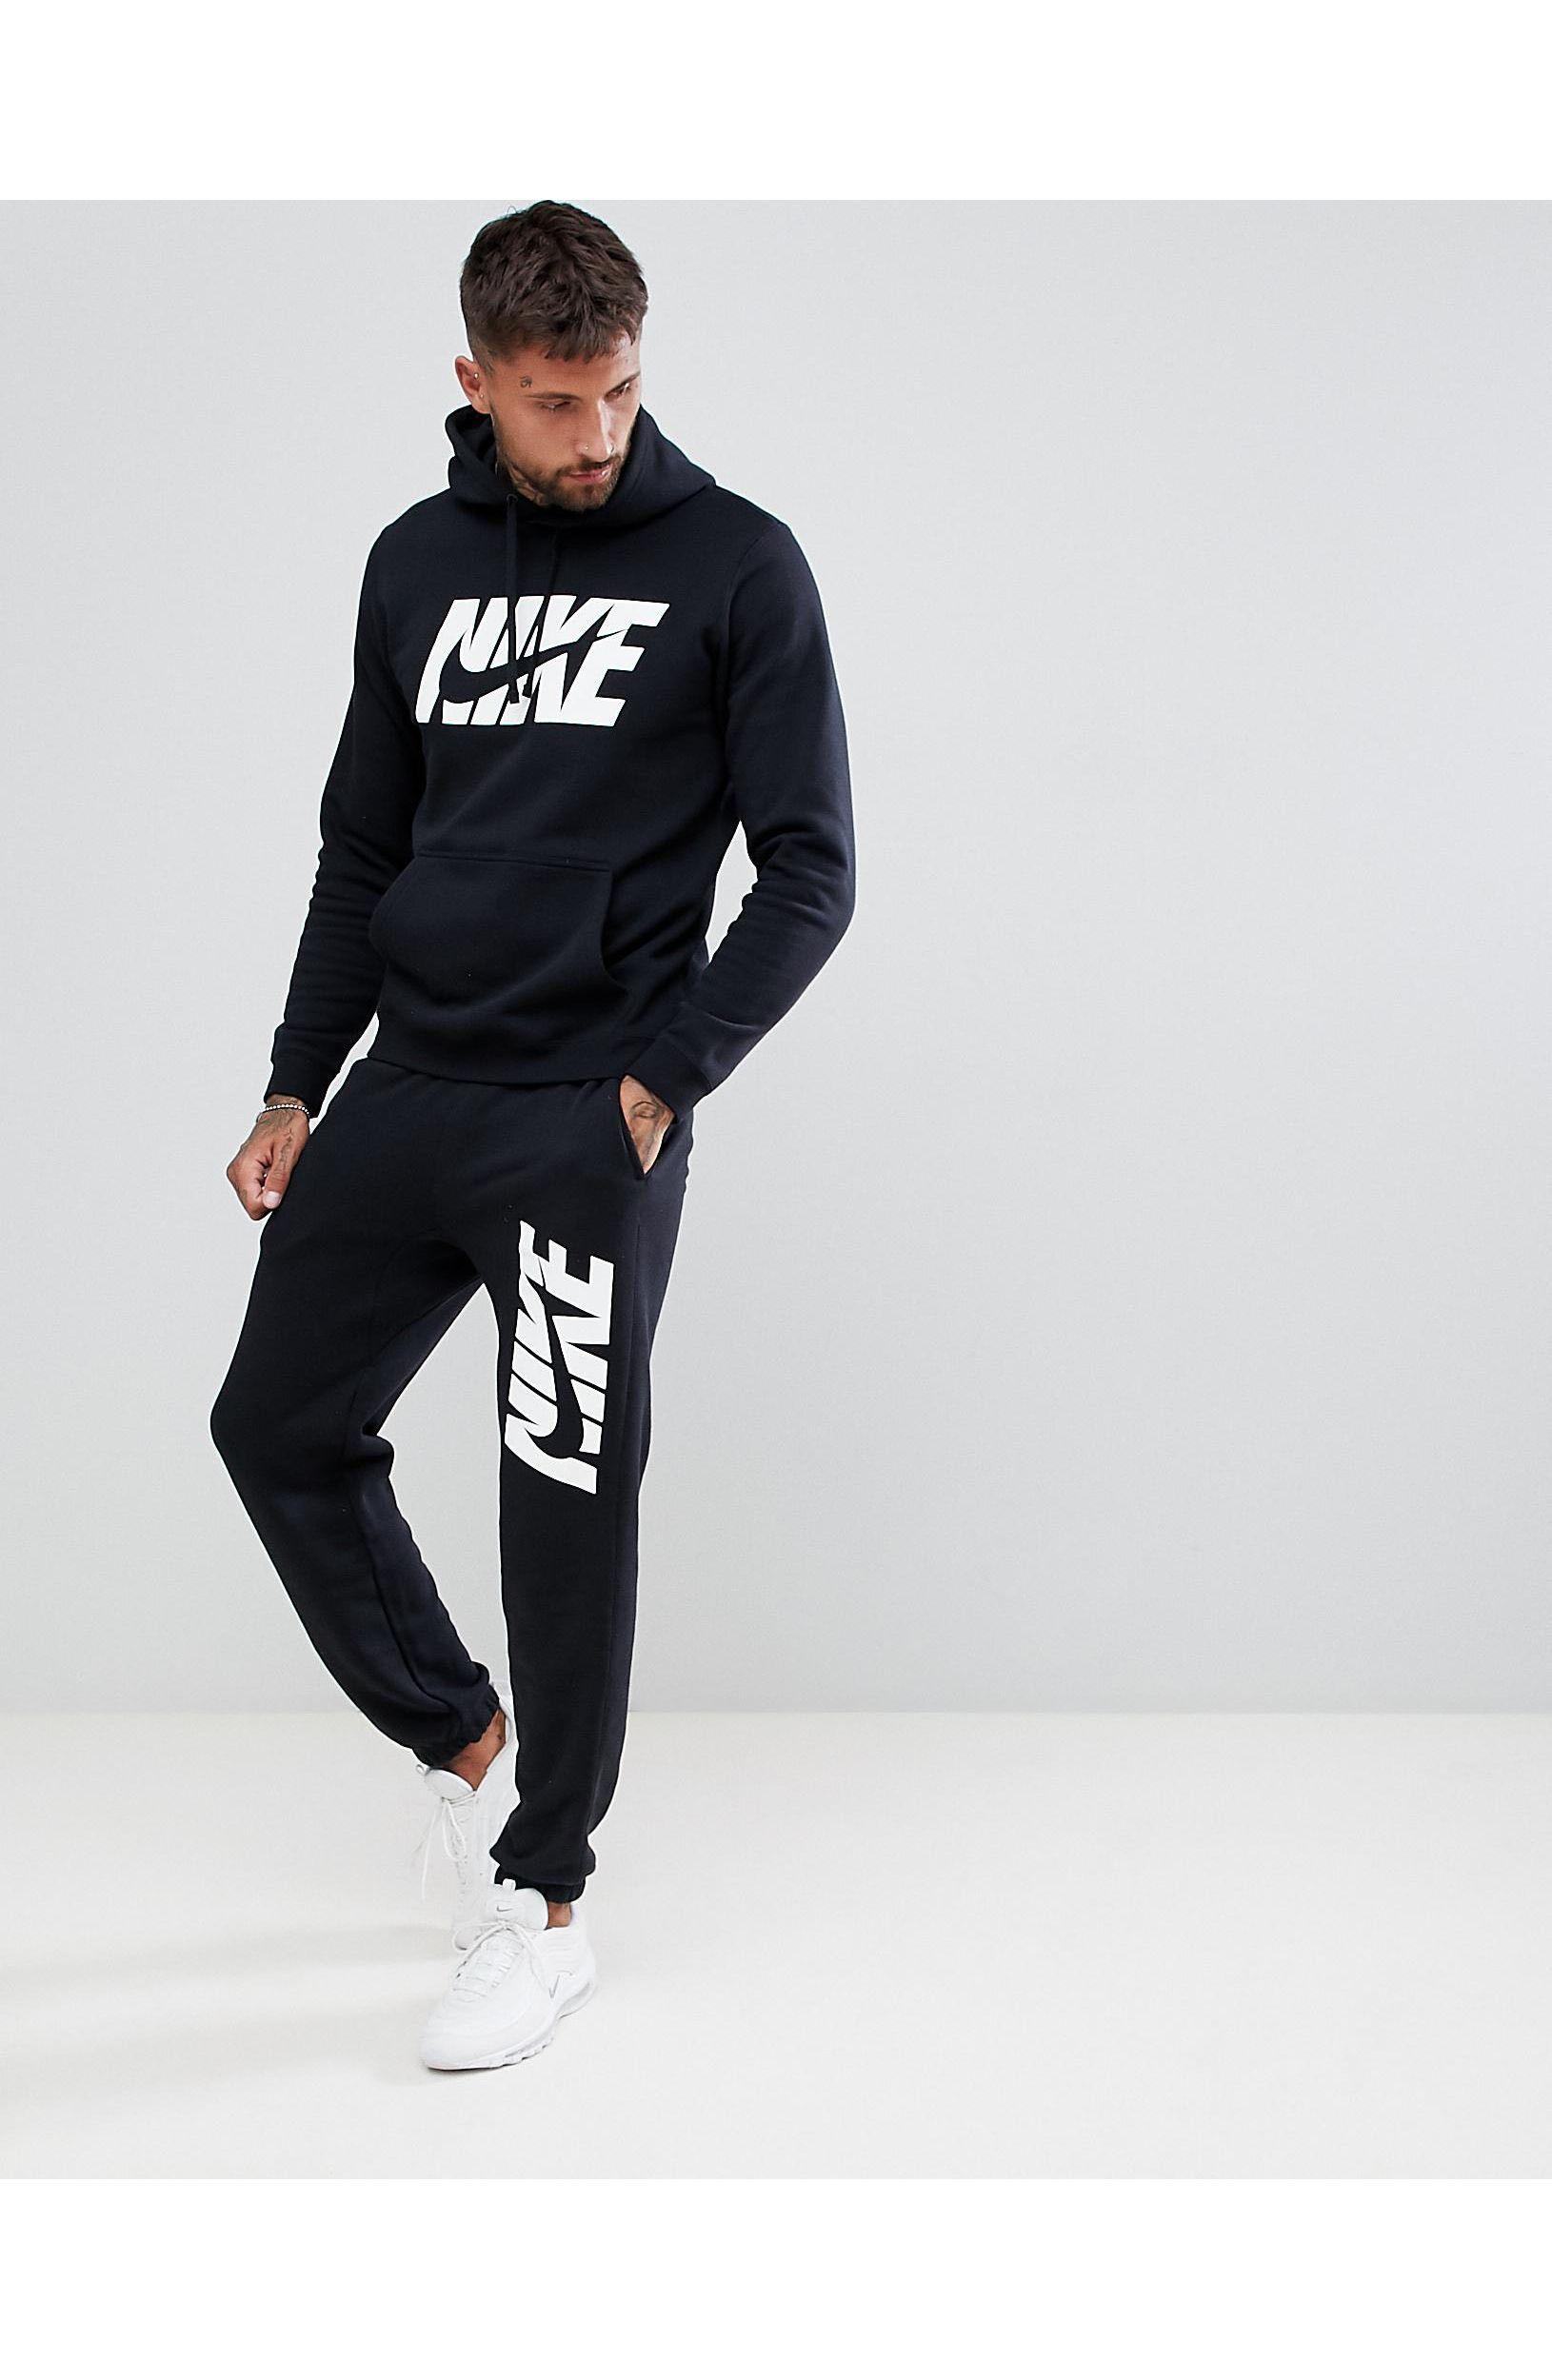 Nike Fleece Graphic Tracksuit Set in 